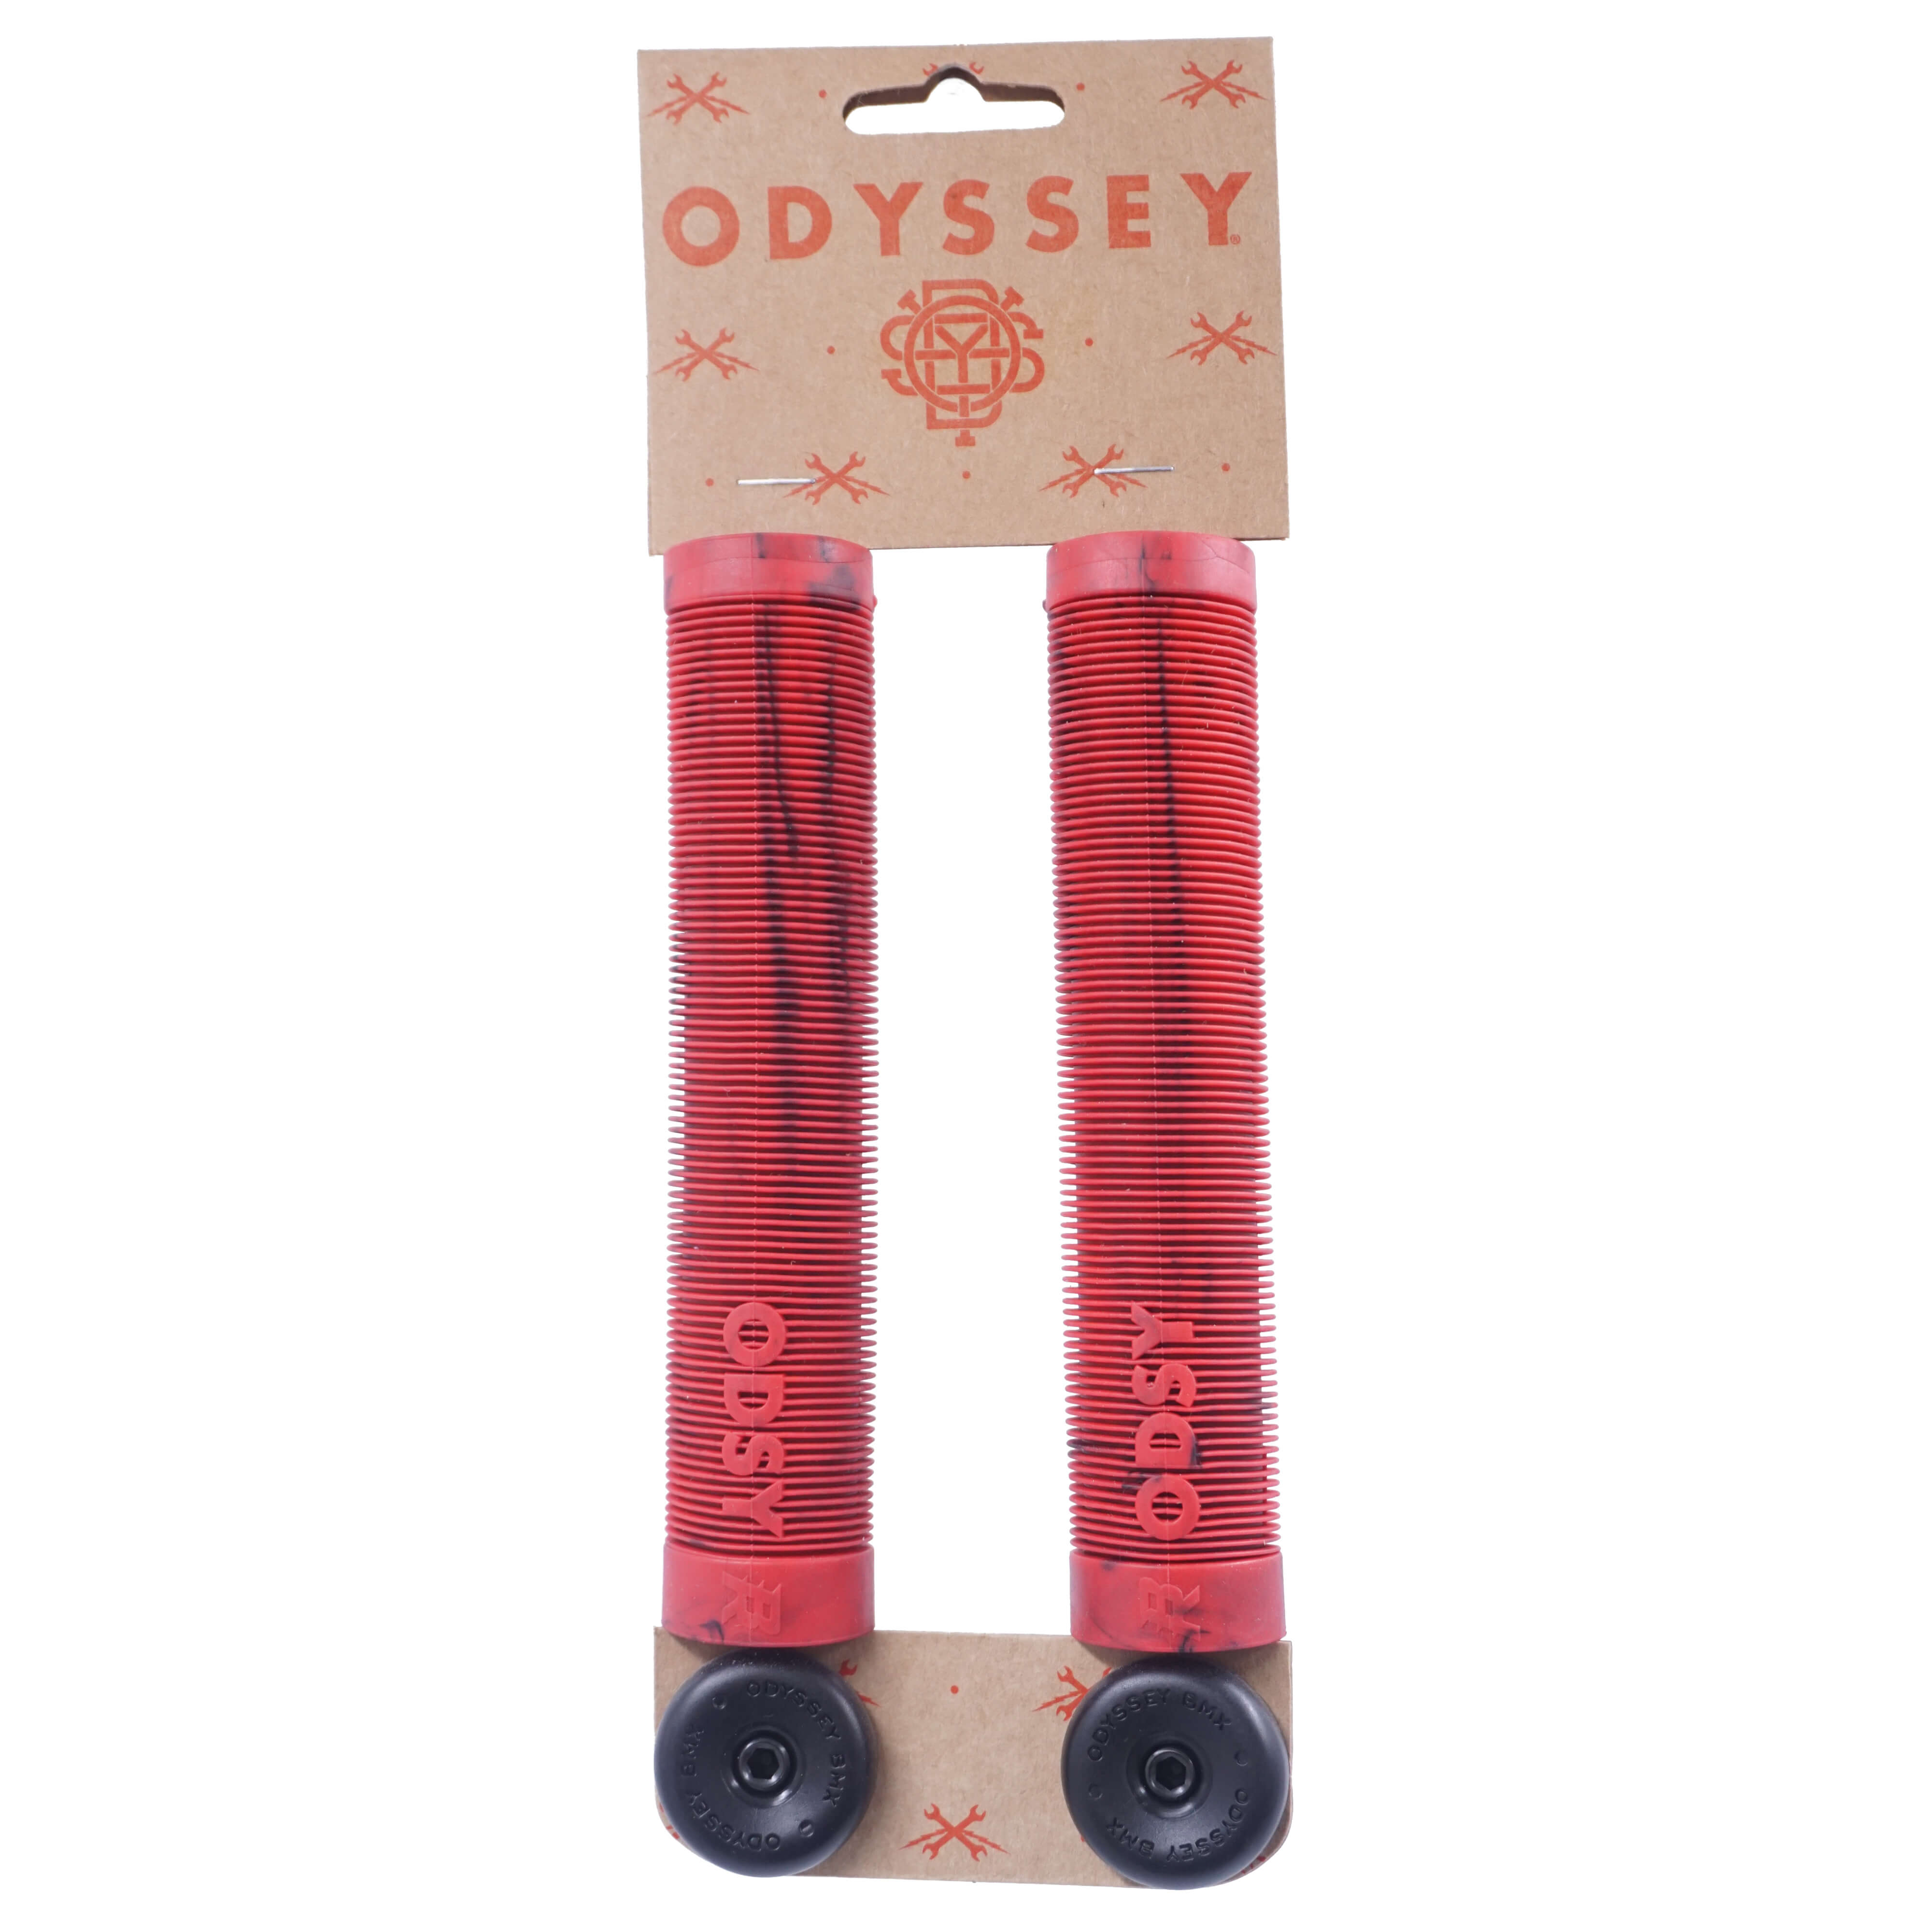 Buy black-red-swirl Odyssey Broc Raiford MX Grips